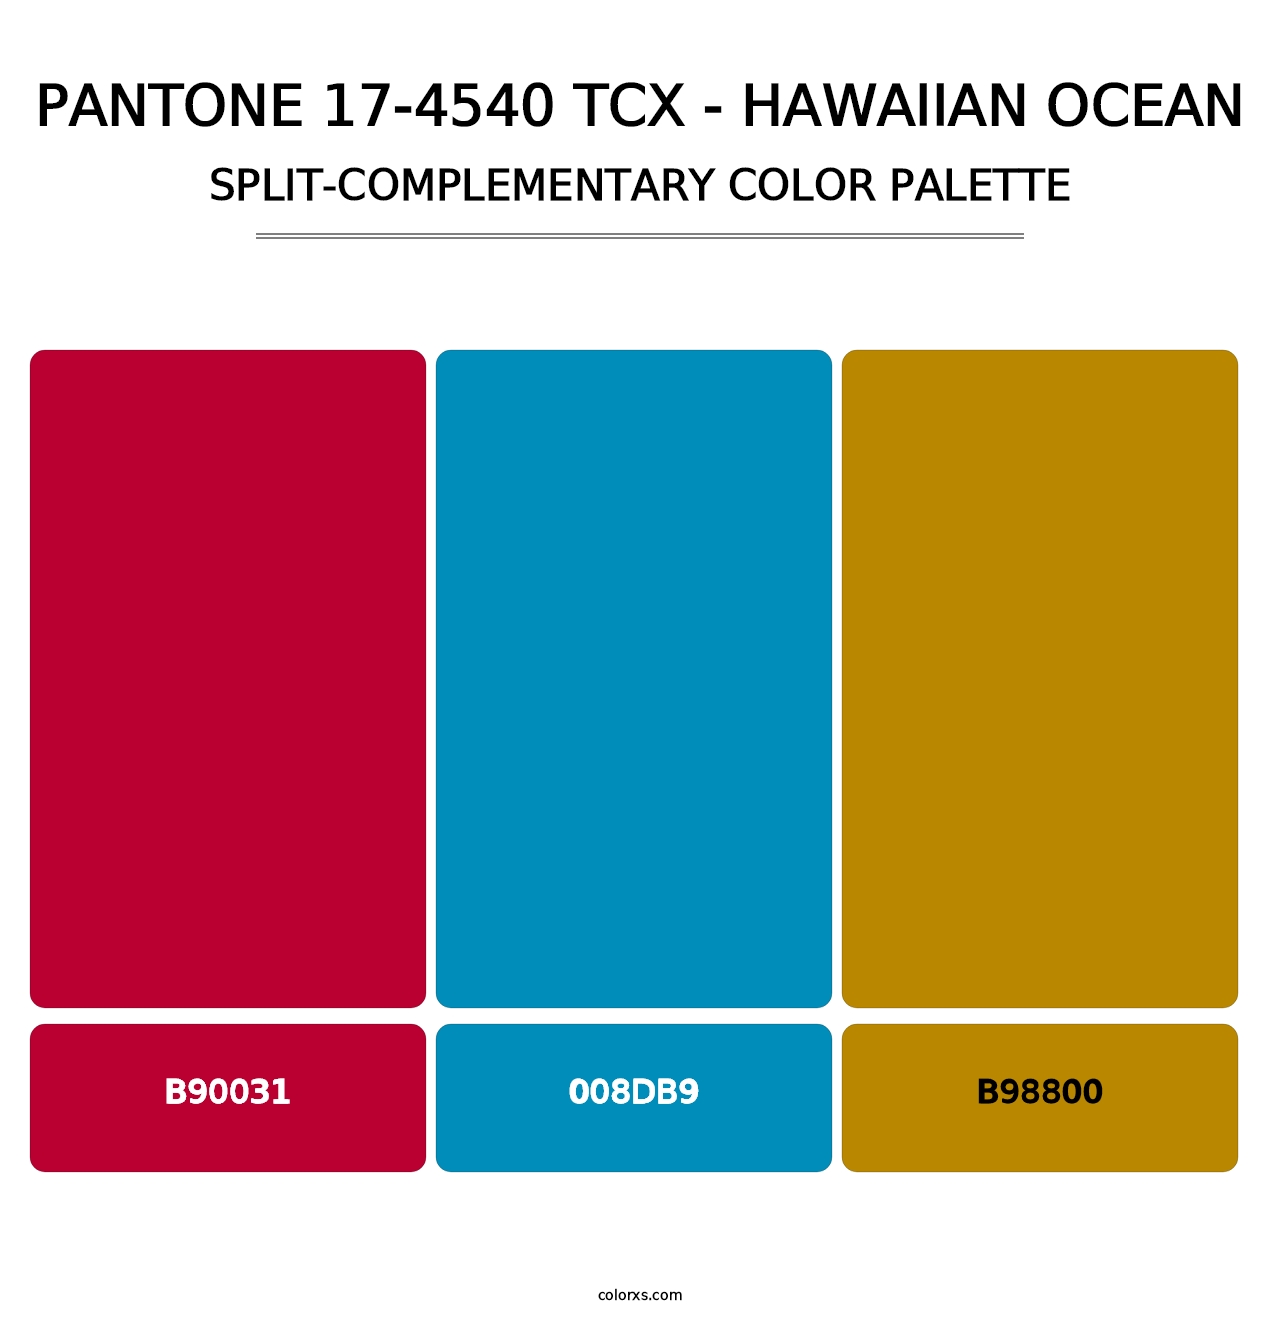 PANTONE 17-4540 TCX - Hawaiian Ocean - Split-Complementary Color Palette